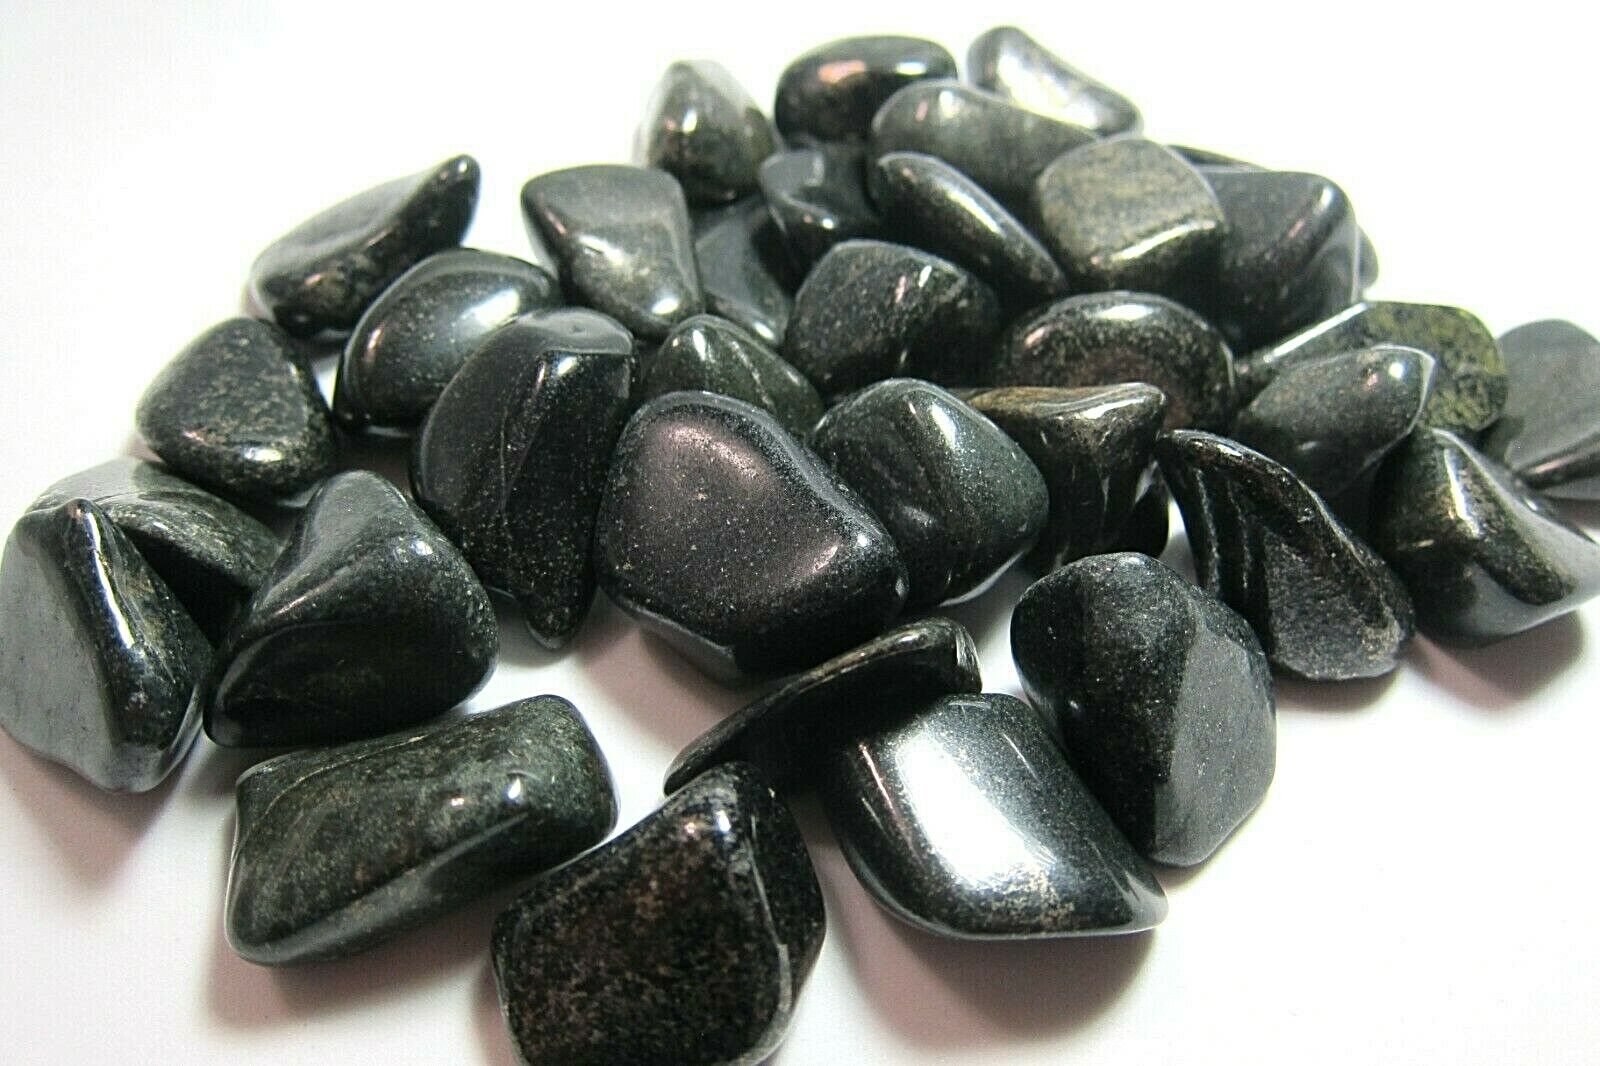 1x Black Lemurian Jade Tumbled Stones 20-25mm Reiki Healing Crystal Past Abuse 